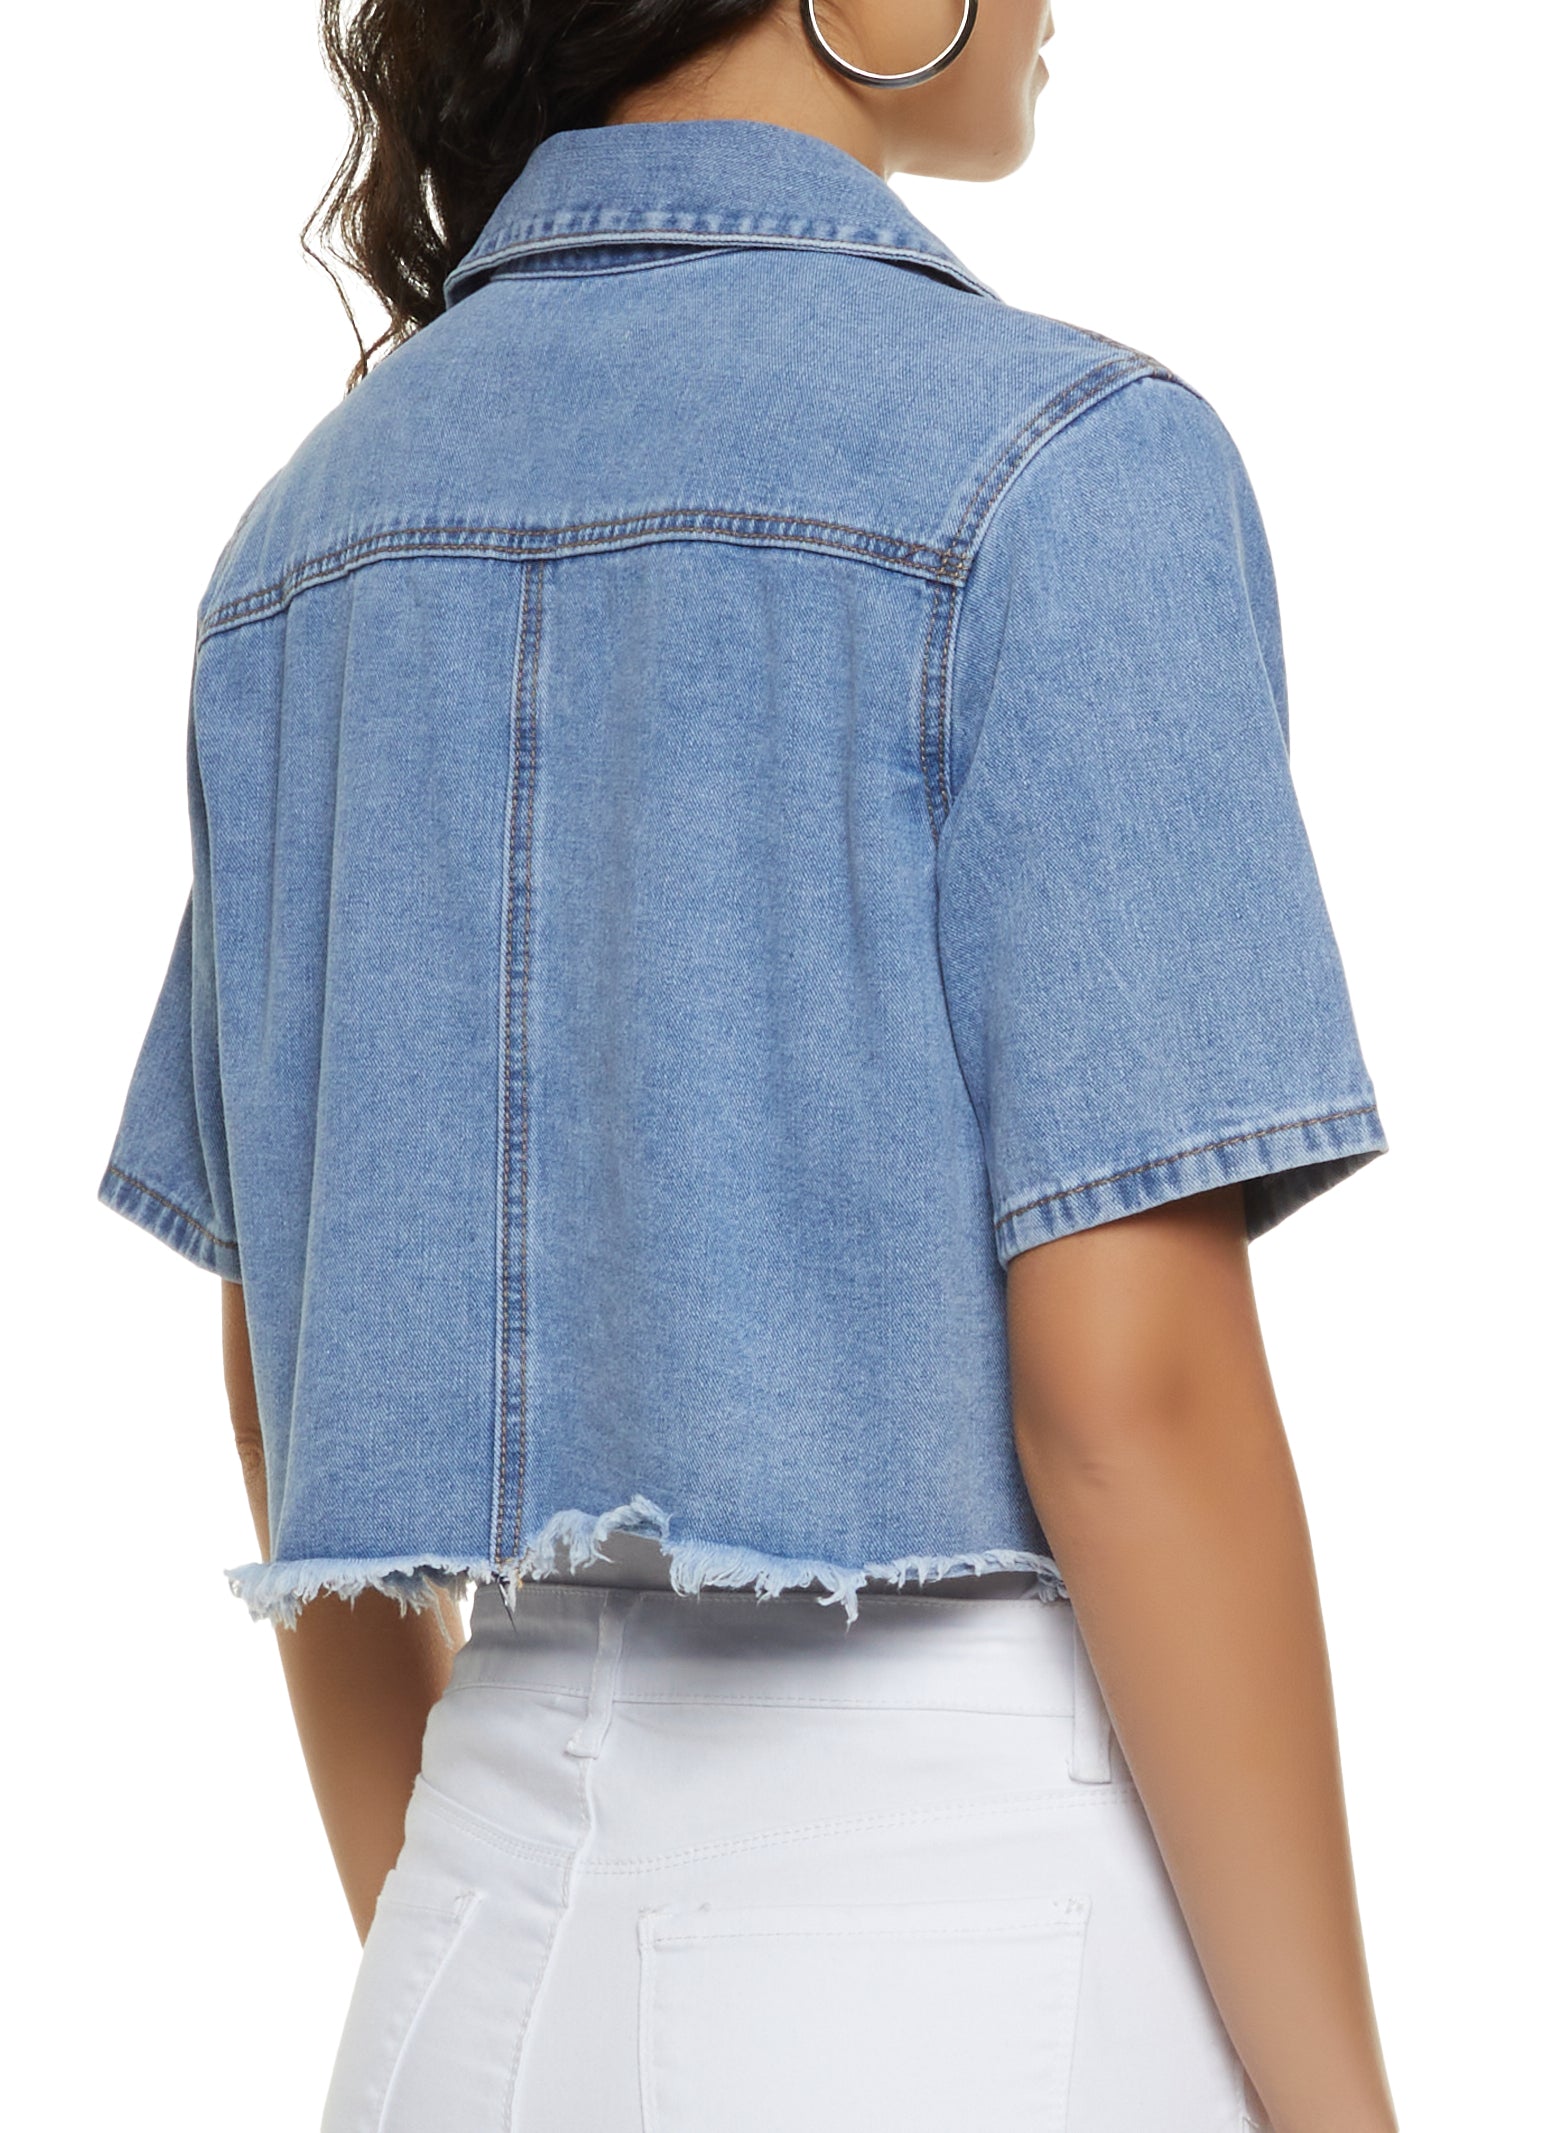 MISS MOLY Women's Cropped Denim Jackets Summer Short Sleeve Classic Casual  Jean | eBay